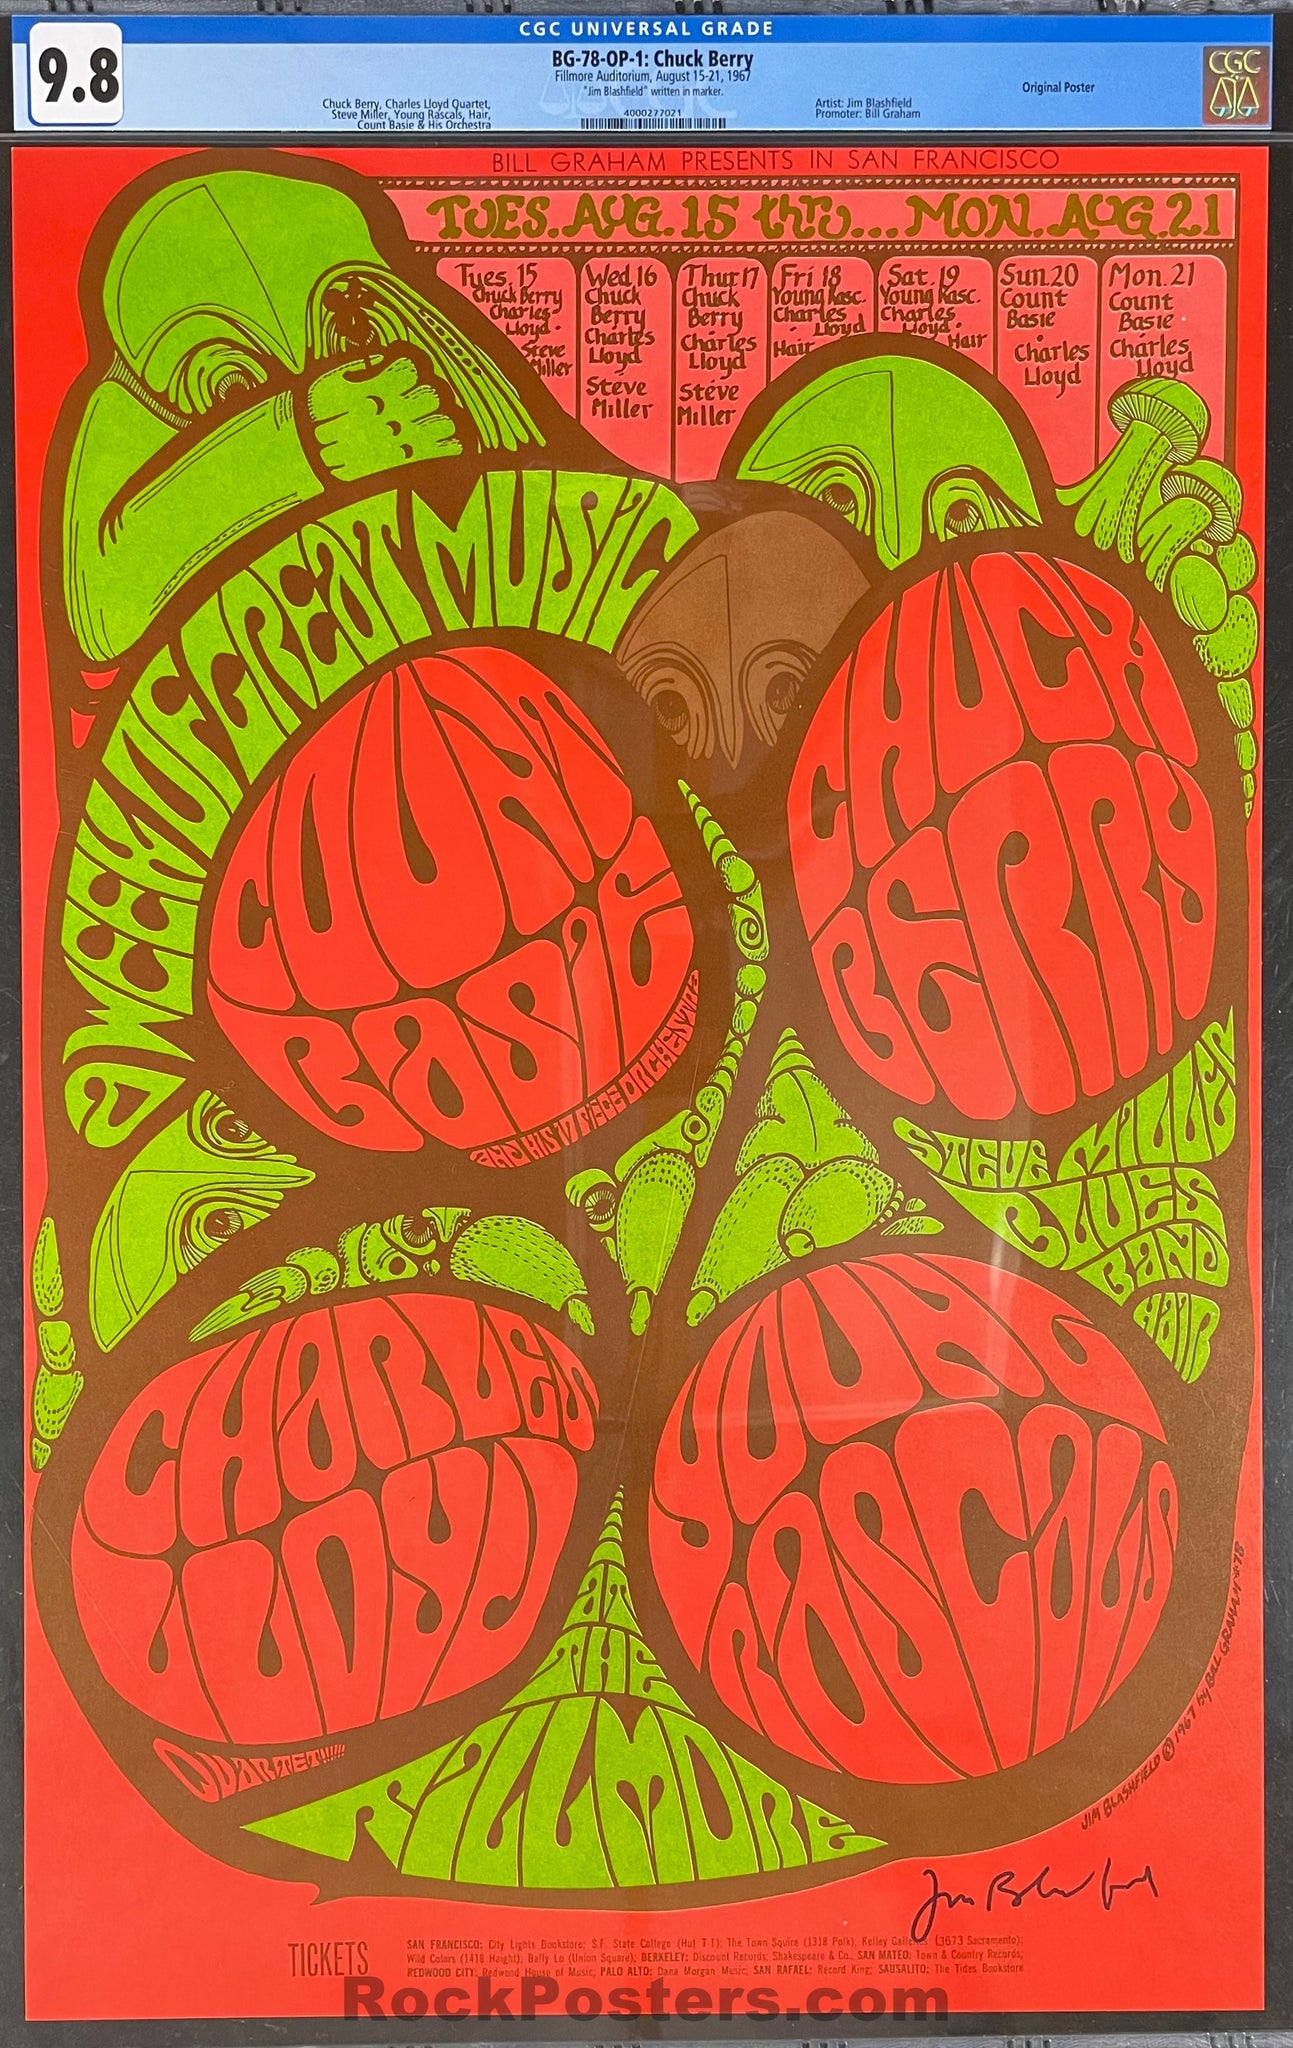 BG-78 - Count Basie Chuck Berry - Jim Blashfield Signed - 1967 Poster - Fillmore Auditorium - CGC Graded 9.8